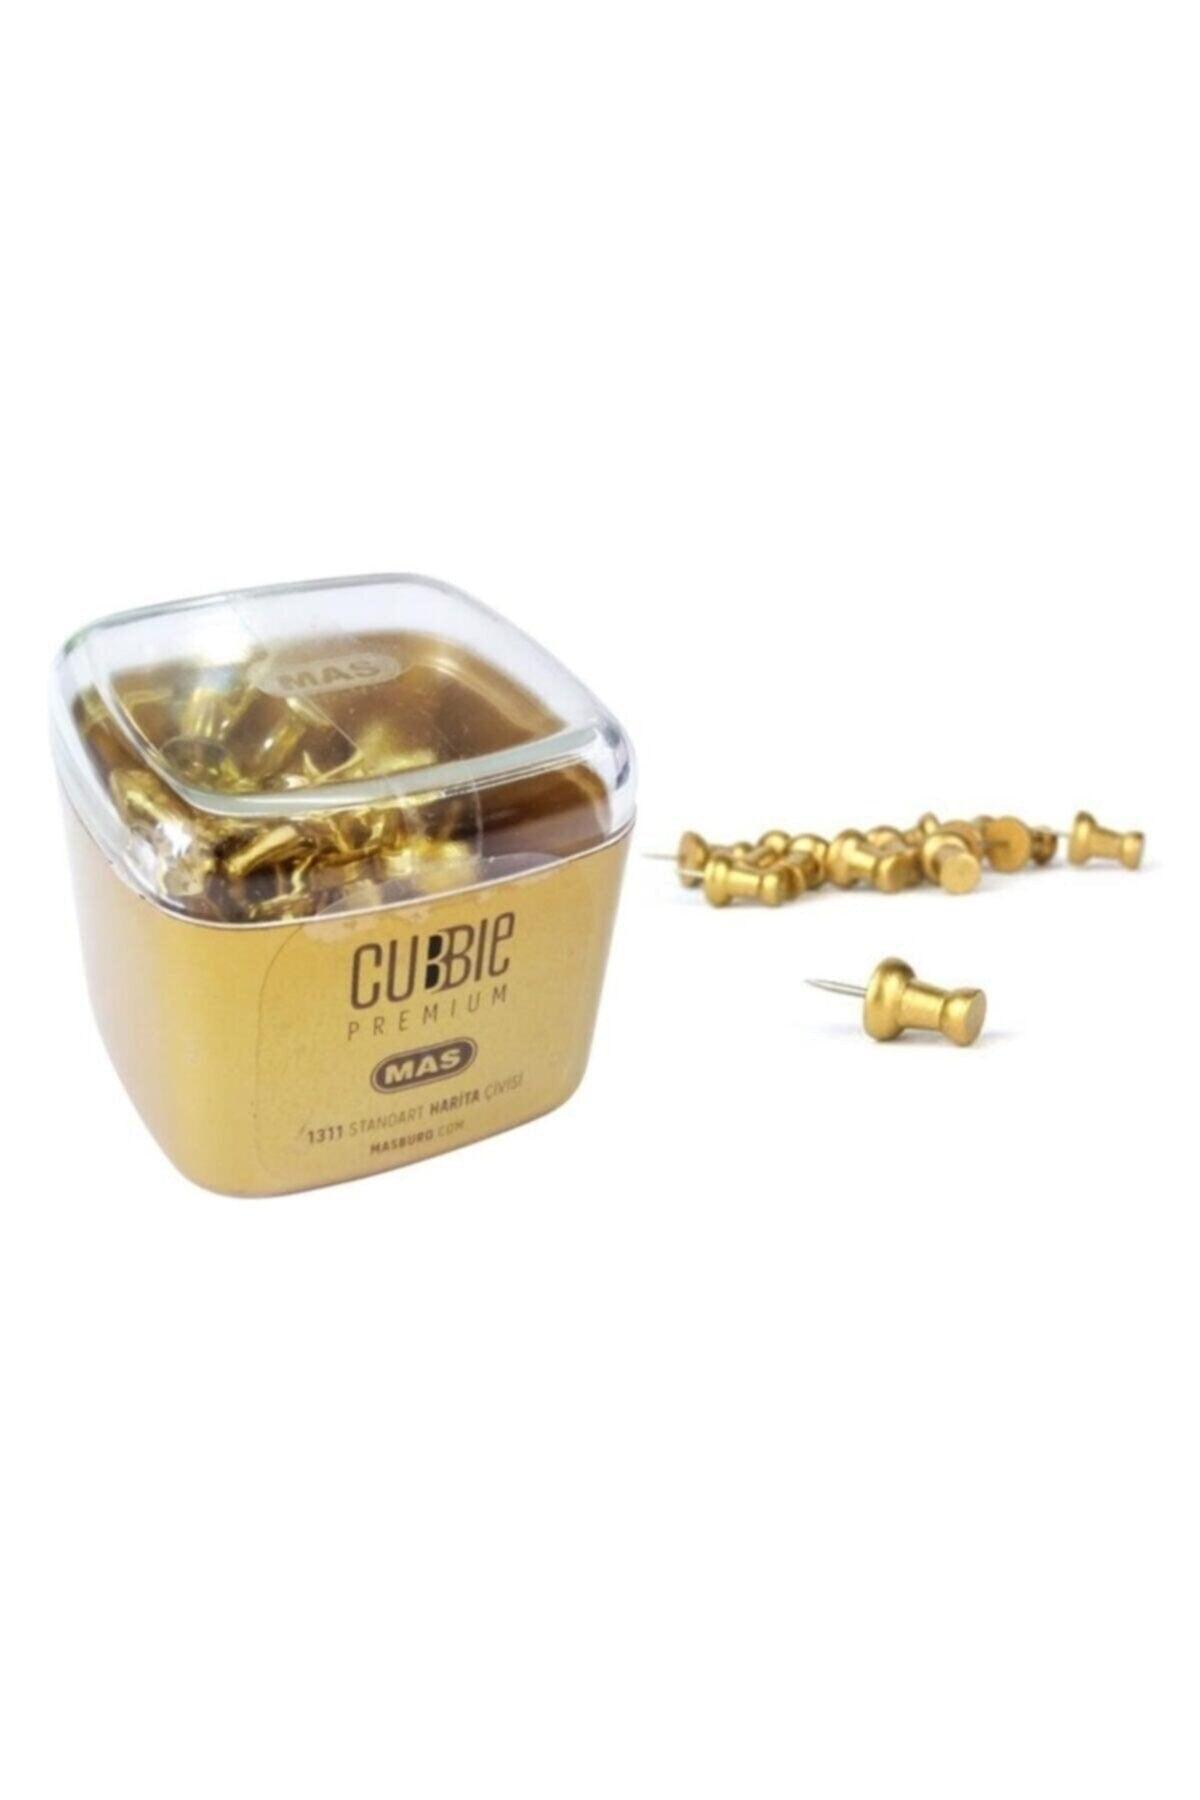 Cubbie Premium Gold Standard Map Nail